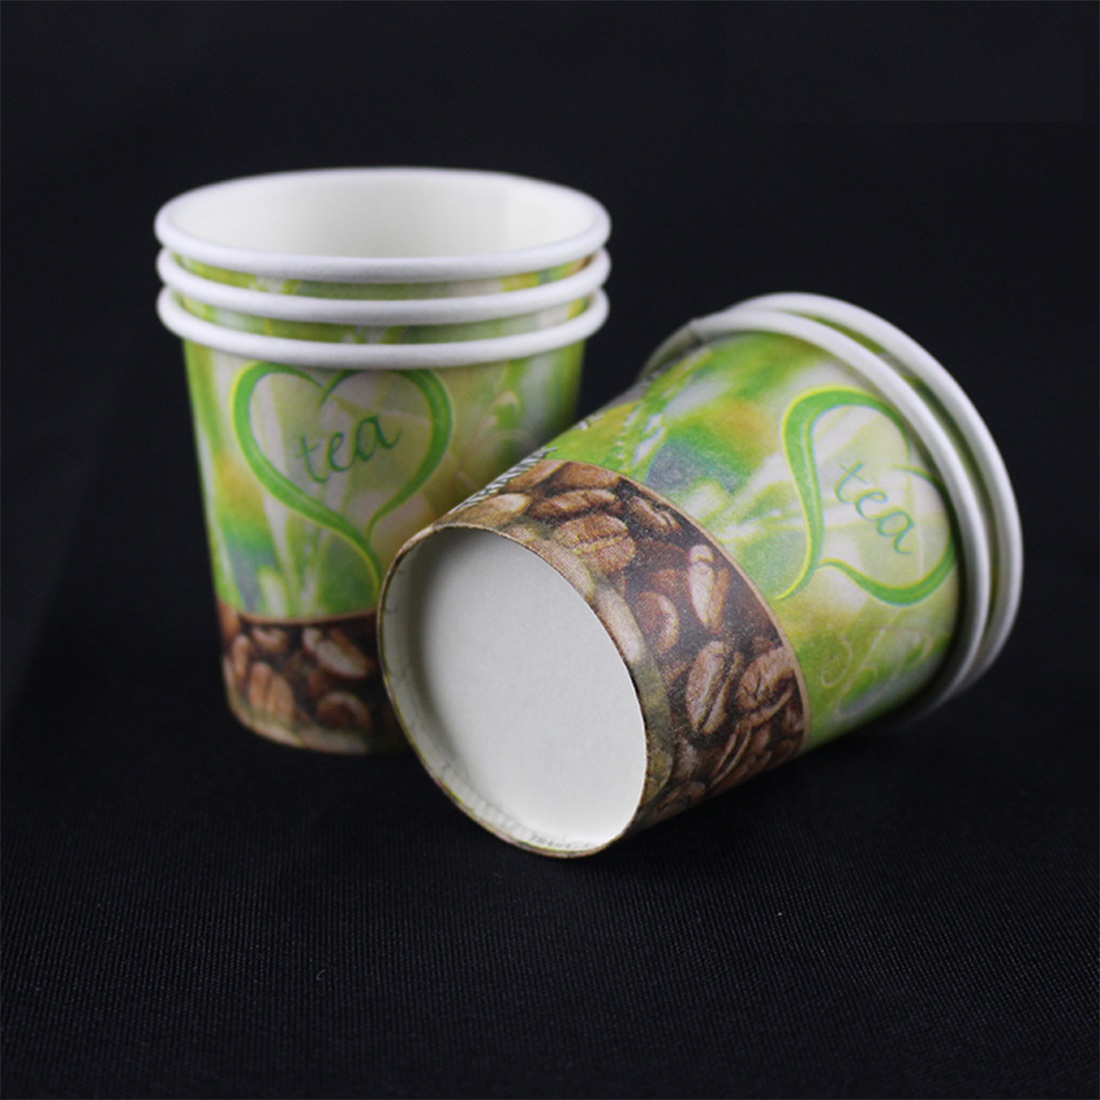 Buy Disposable Tea Cups 94pcs Set Online ₹249 From Shopclues